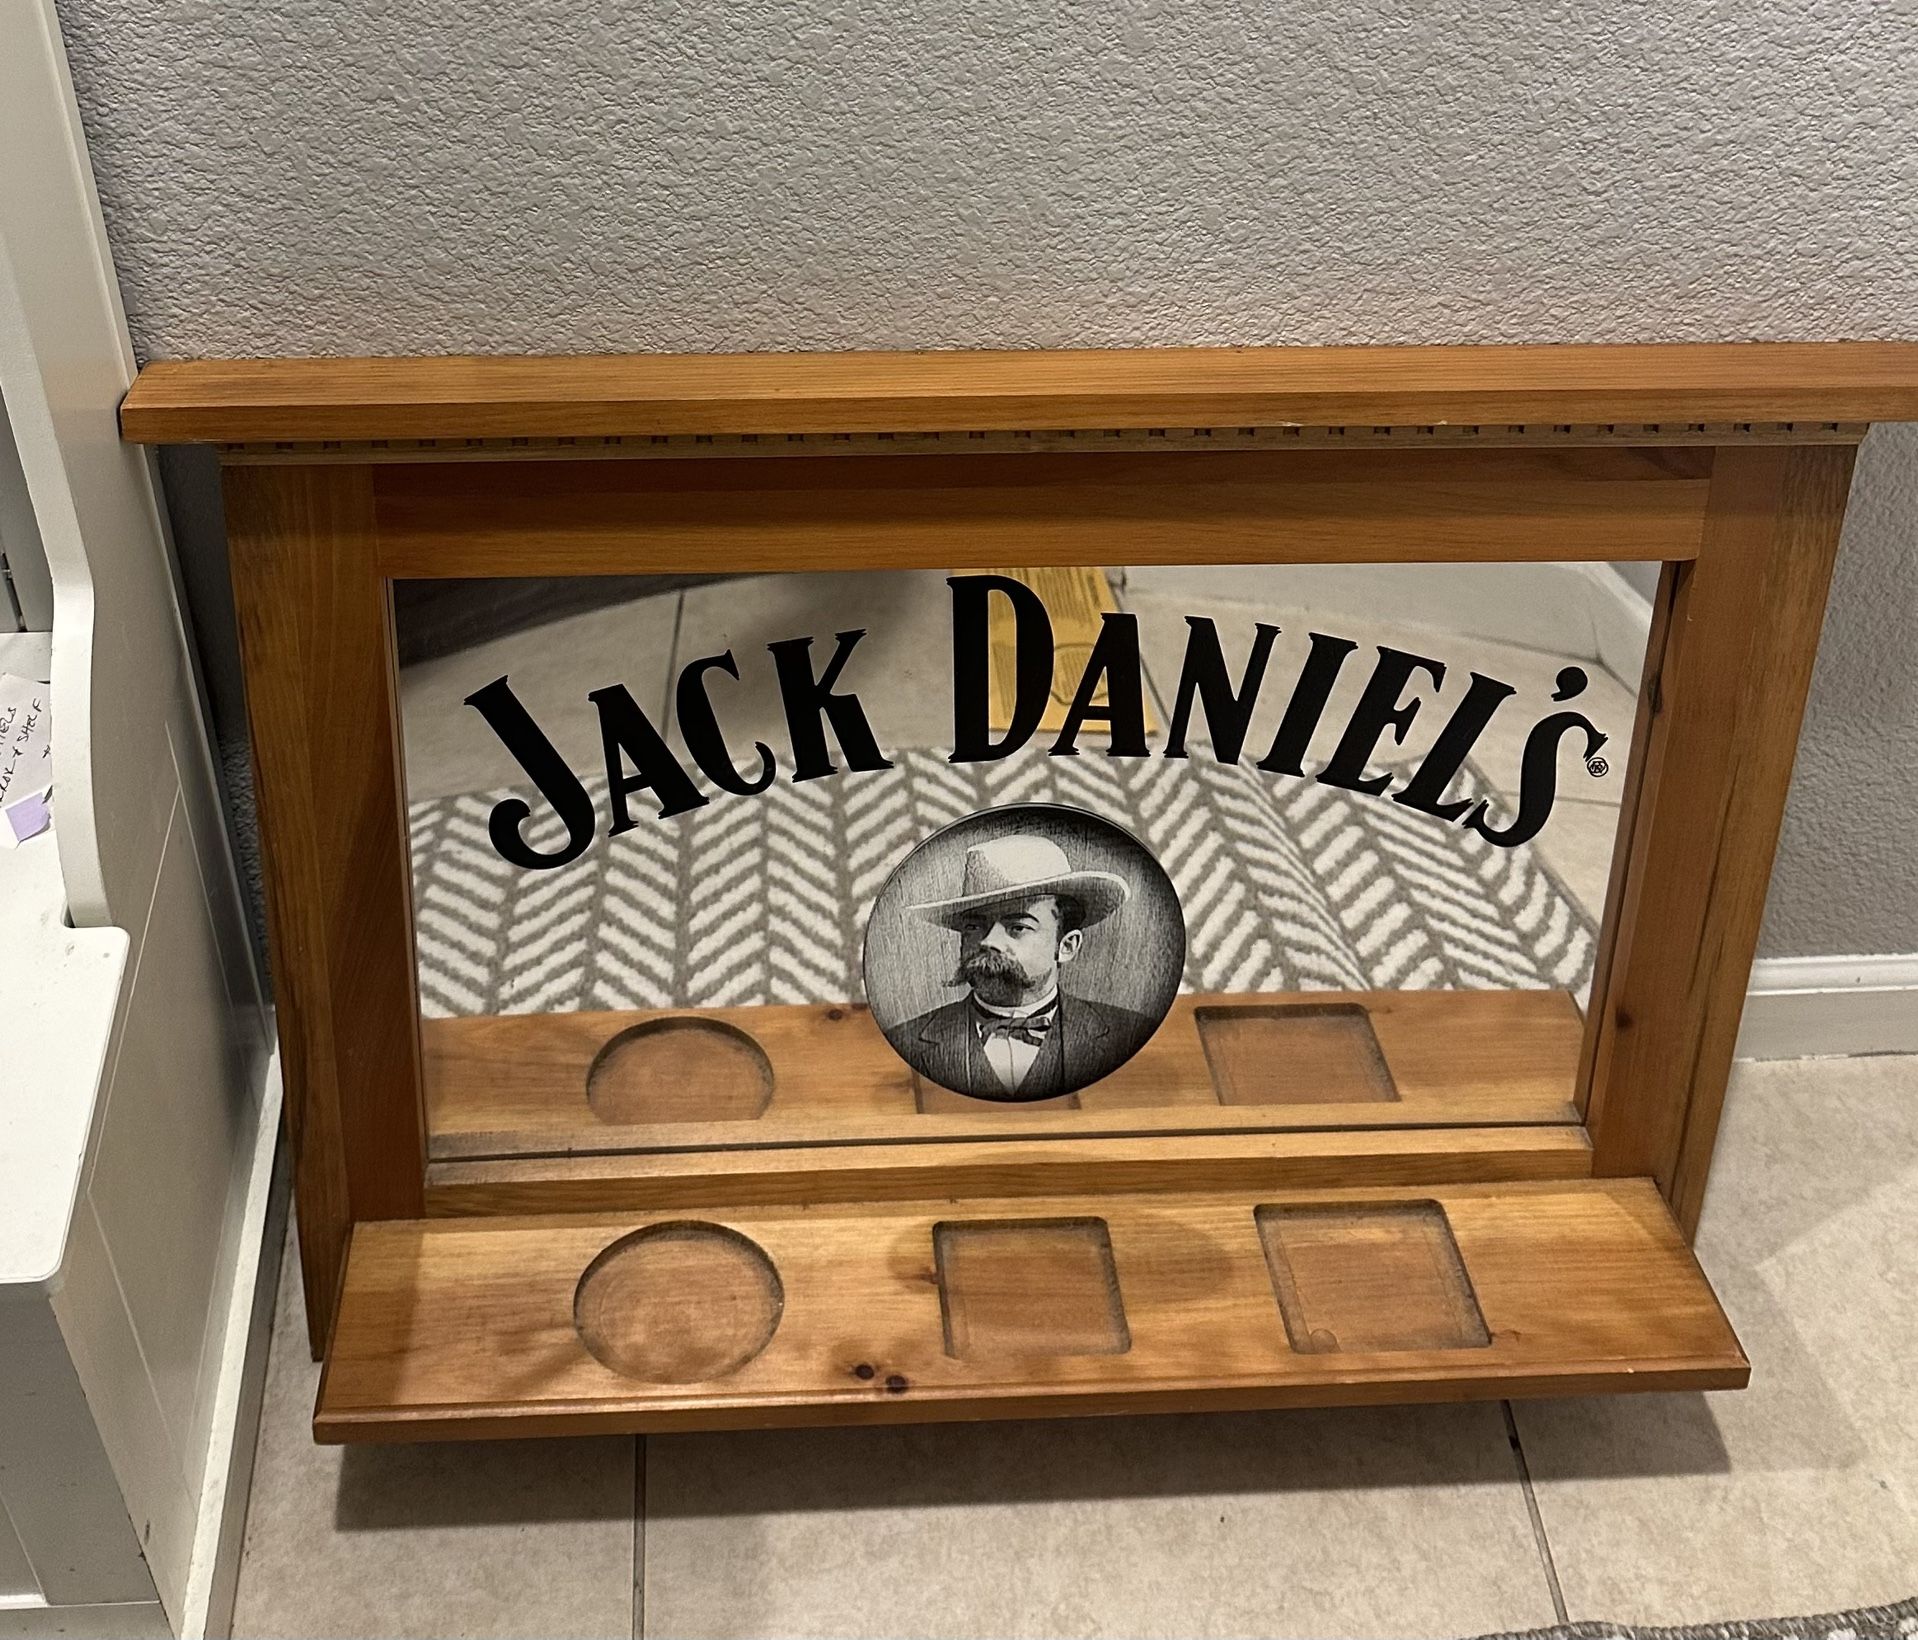 Jack Daniel’s Mirror 